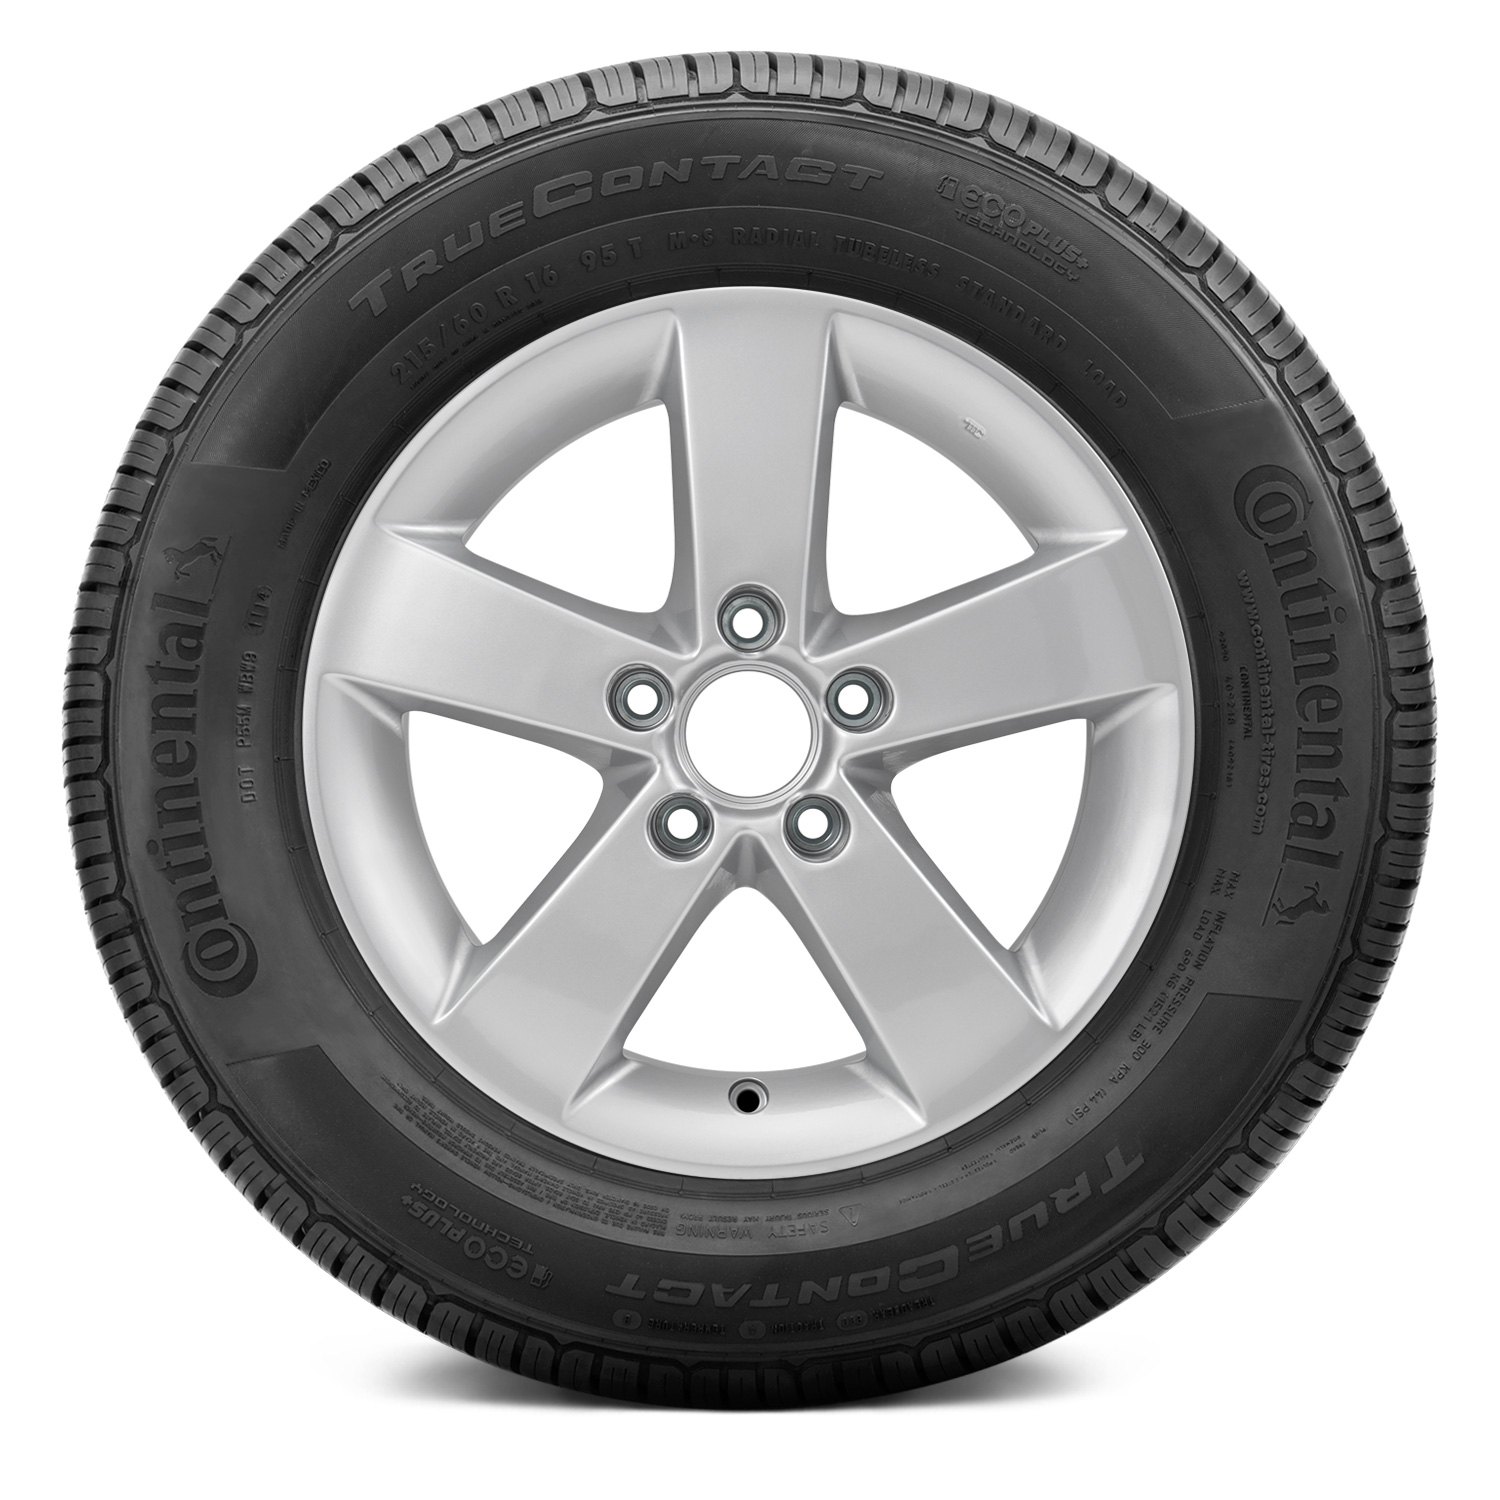 continental-tire-235-60r18-h-truecontact-all-season-fuel-efficient-ebay